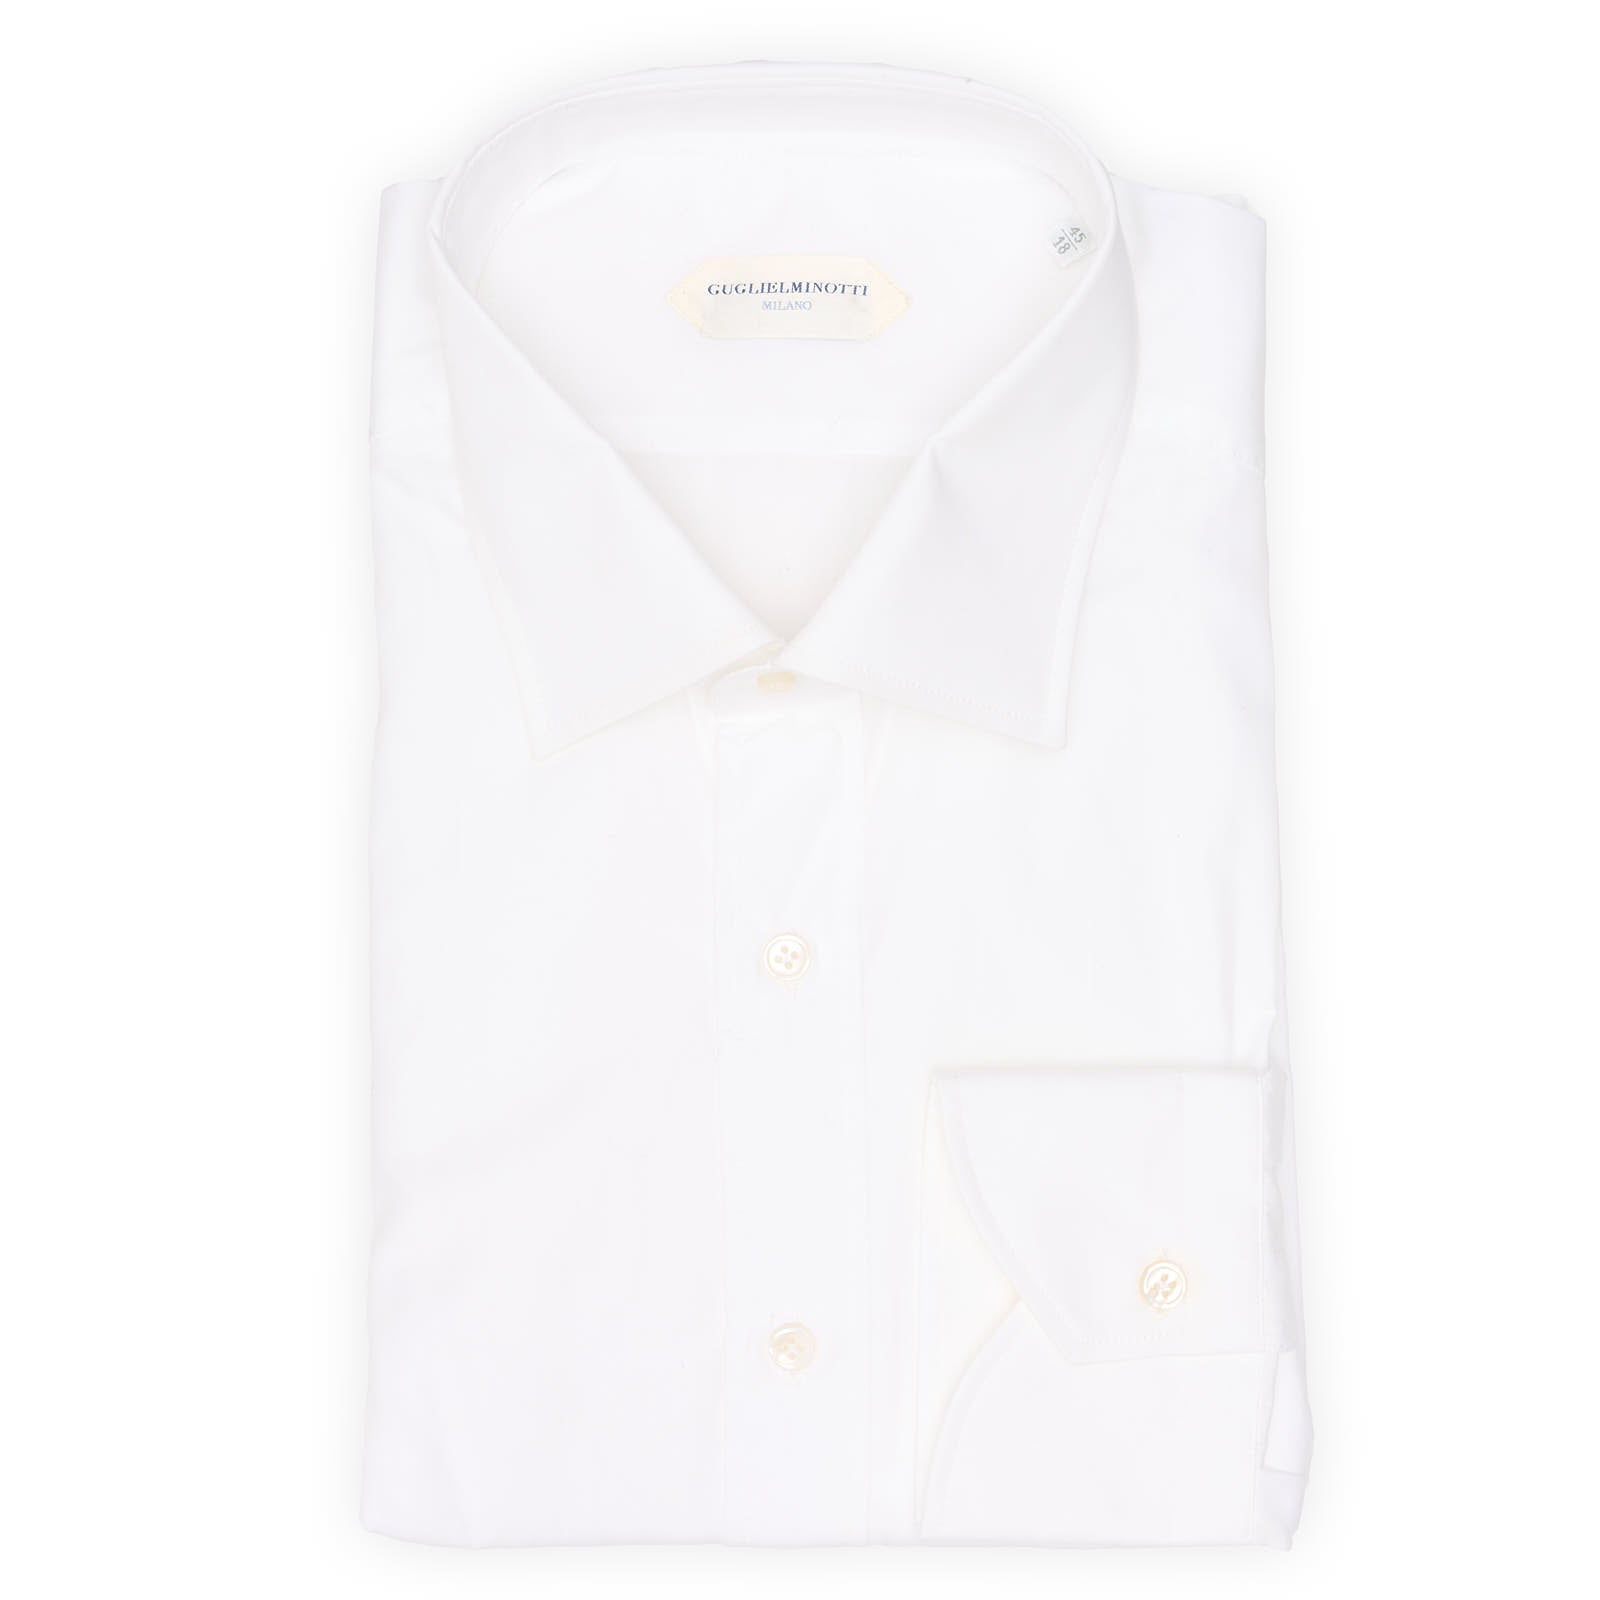 GUGLIELMINOTTI Milano White Cotton Dress Shirt EU 45 NEW US 18